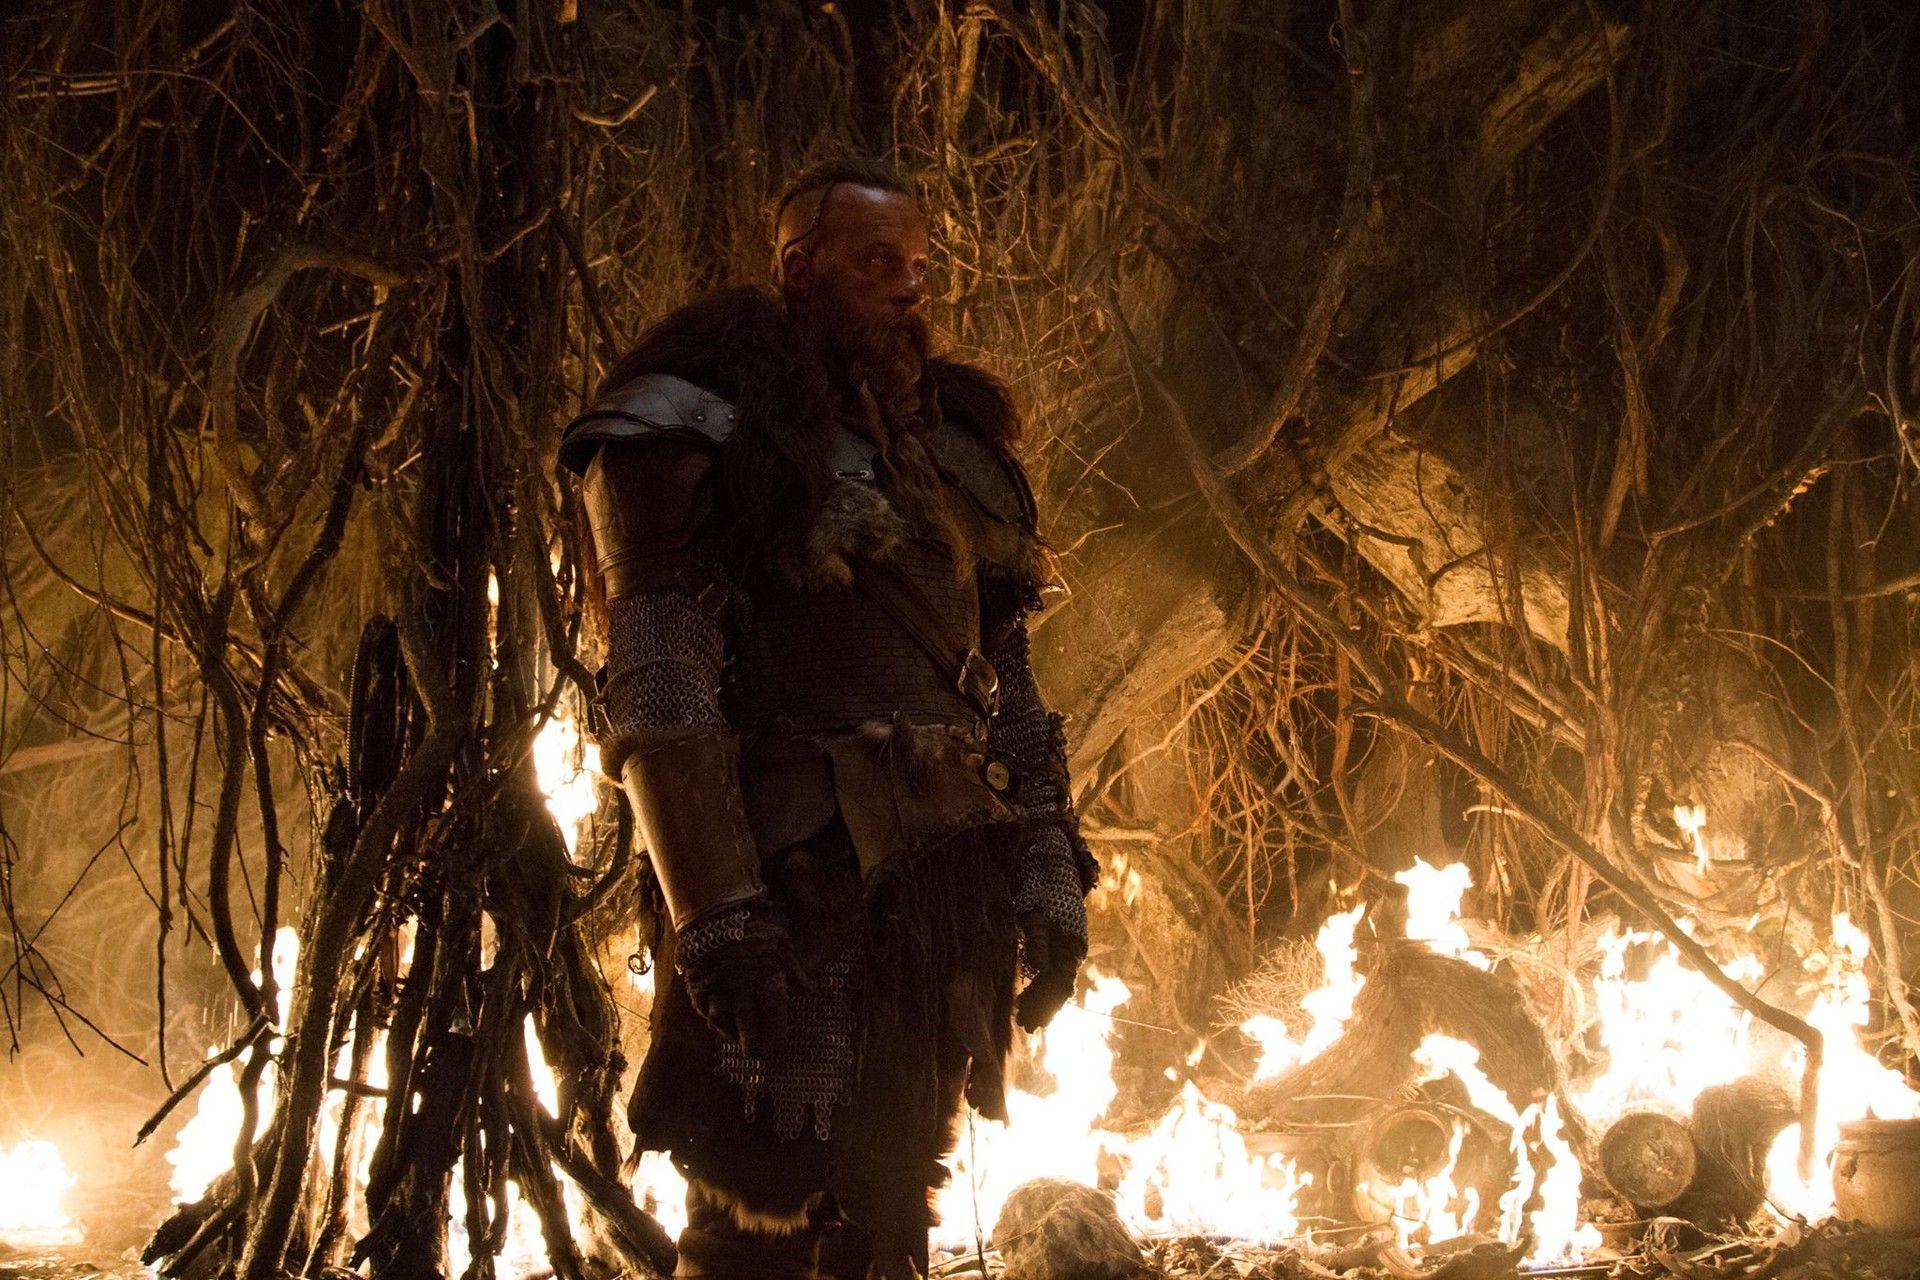 Vin Diesel As Kaulder The Last Witch Hunter Wallpapers